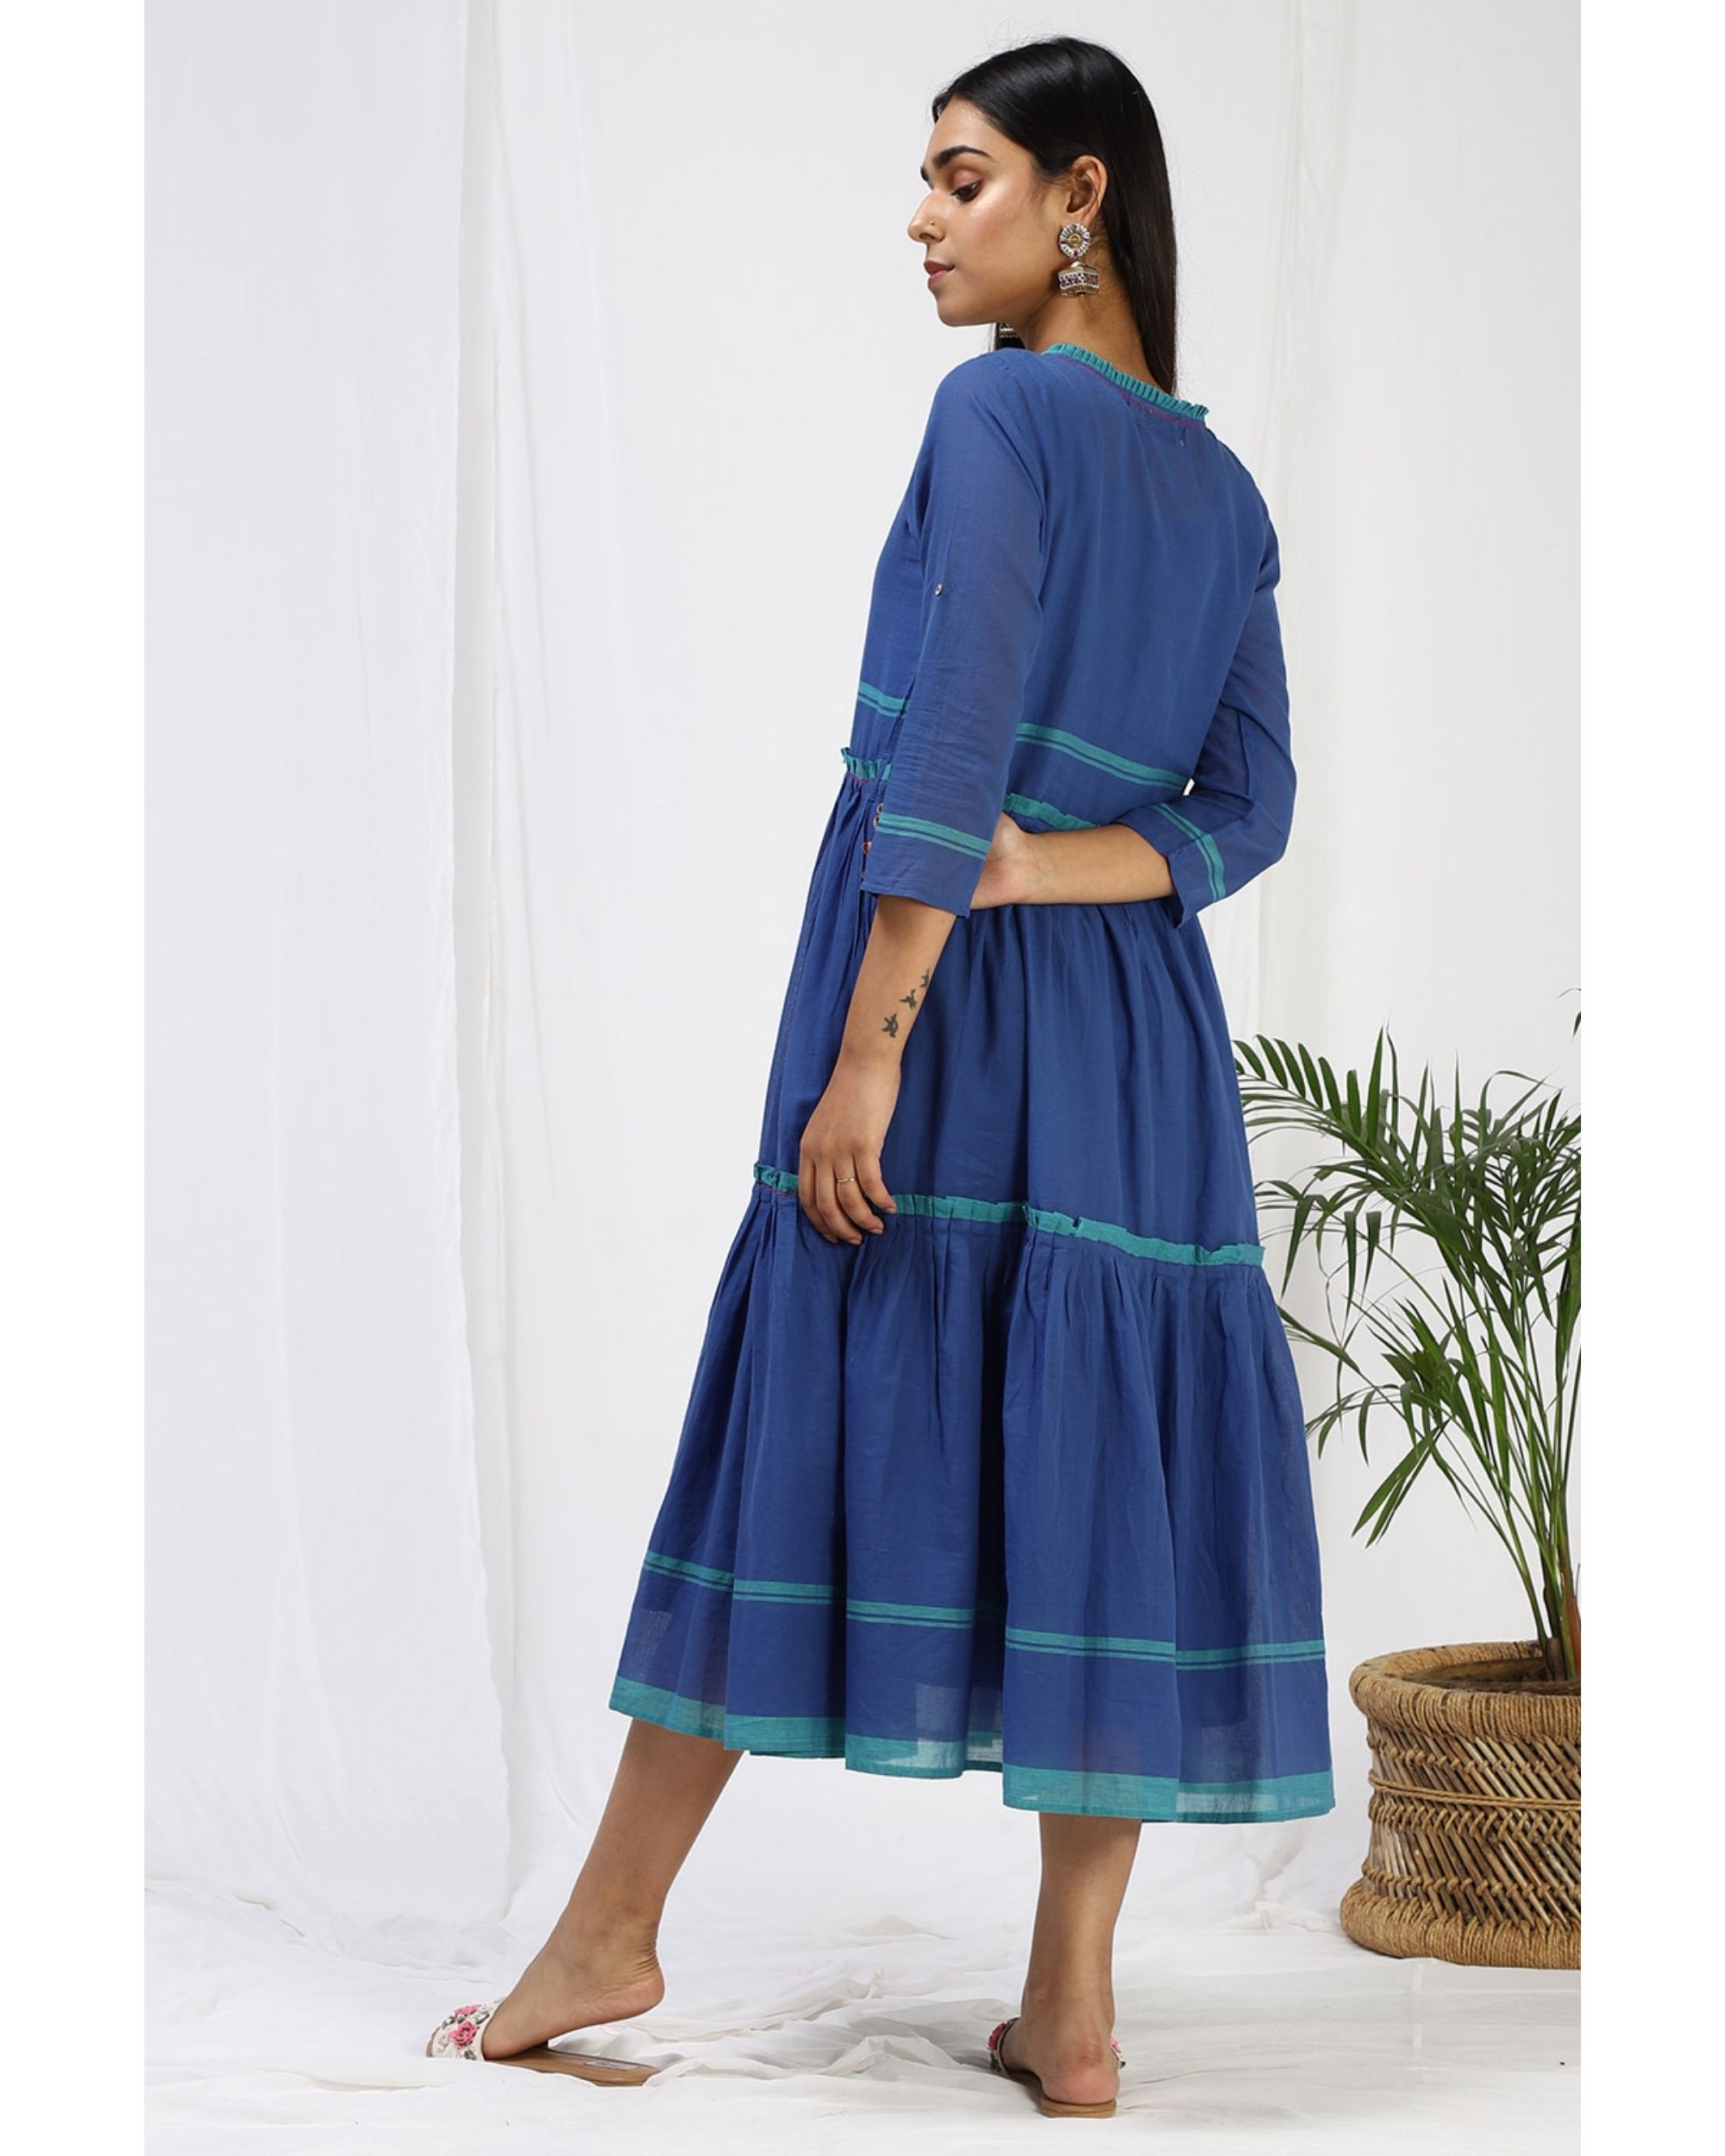 Blue tiered ruffled maxi dress by Miar | The Secret Label